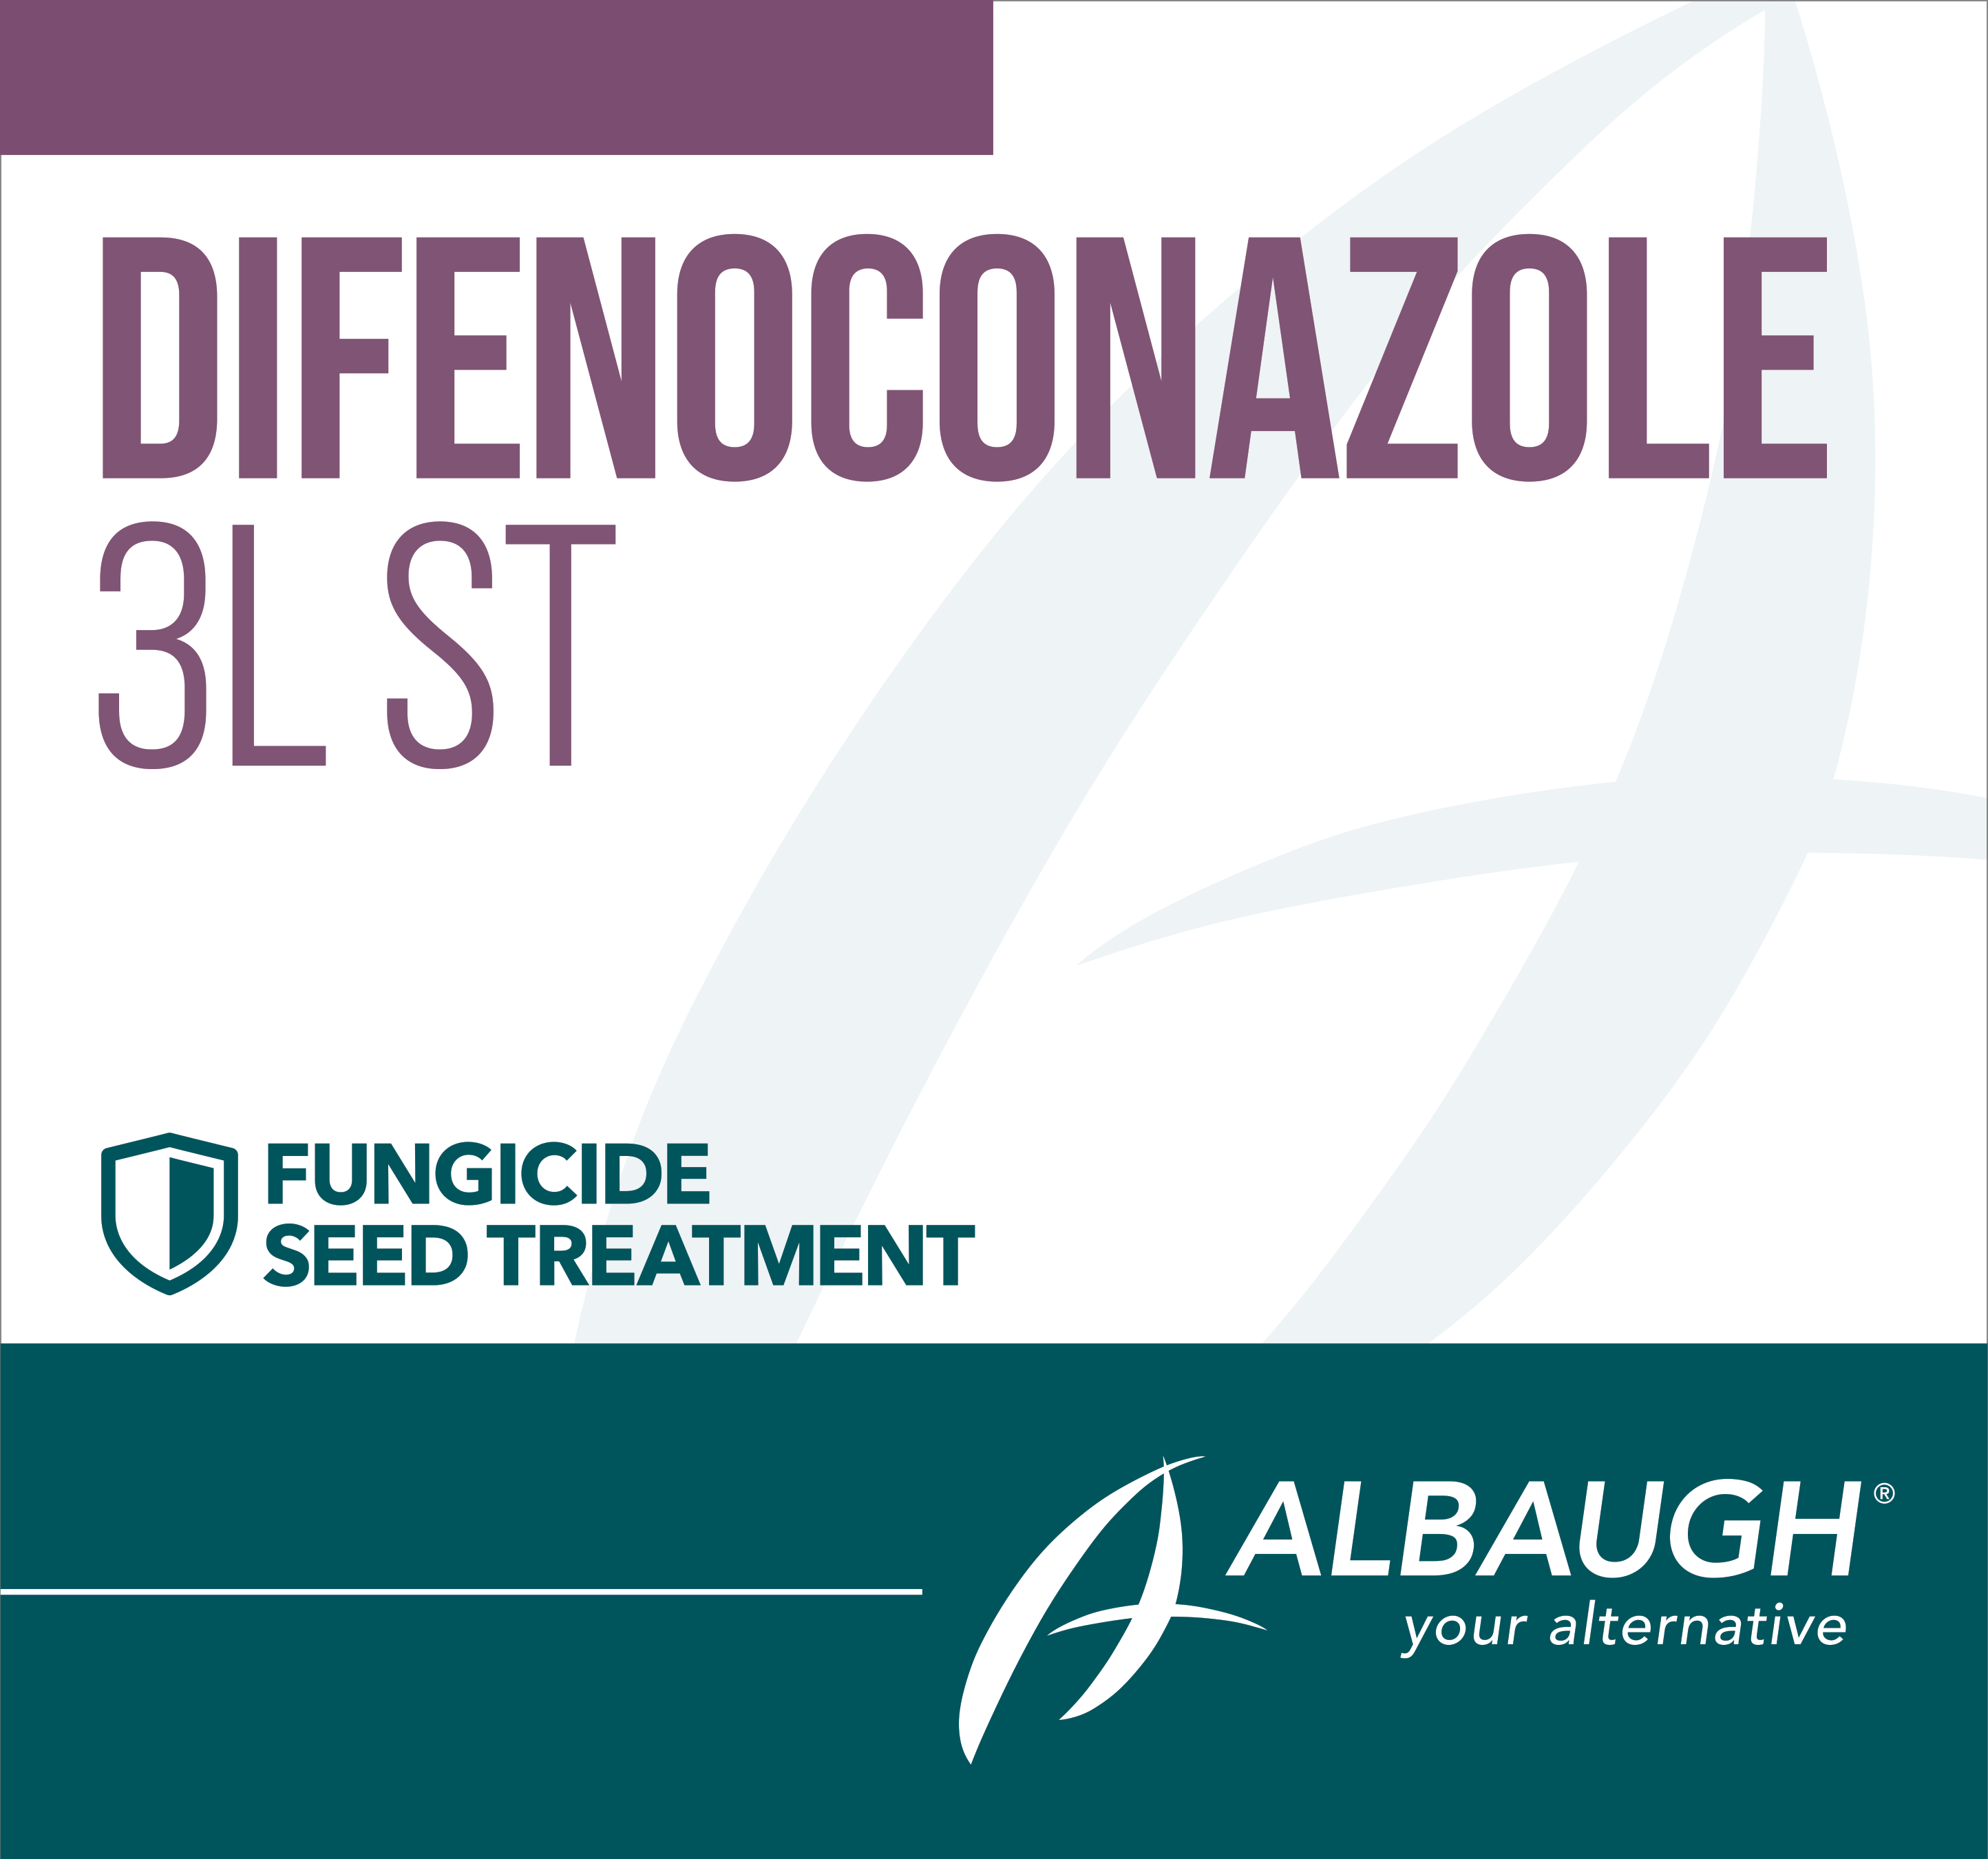 Difenoconazole 3L ST